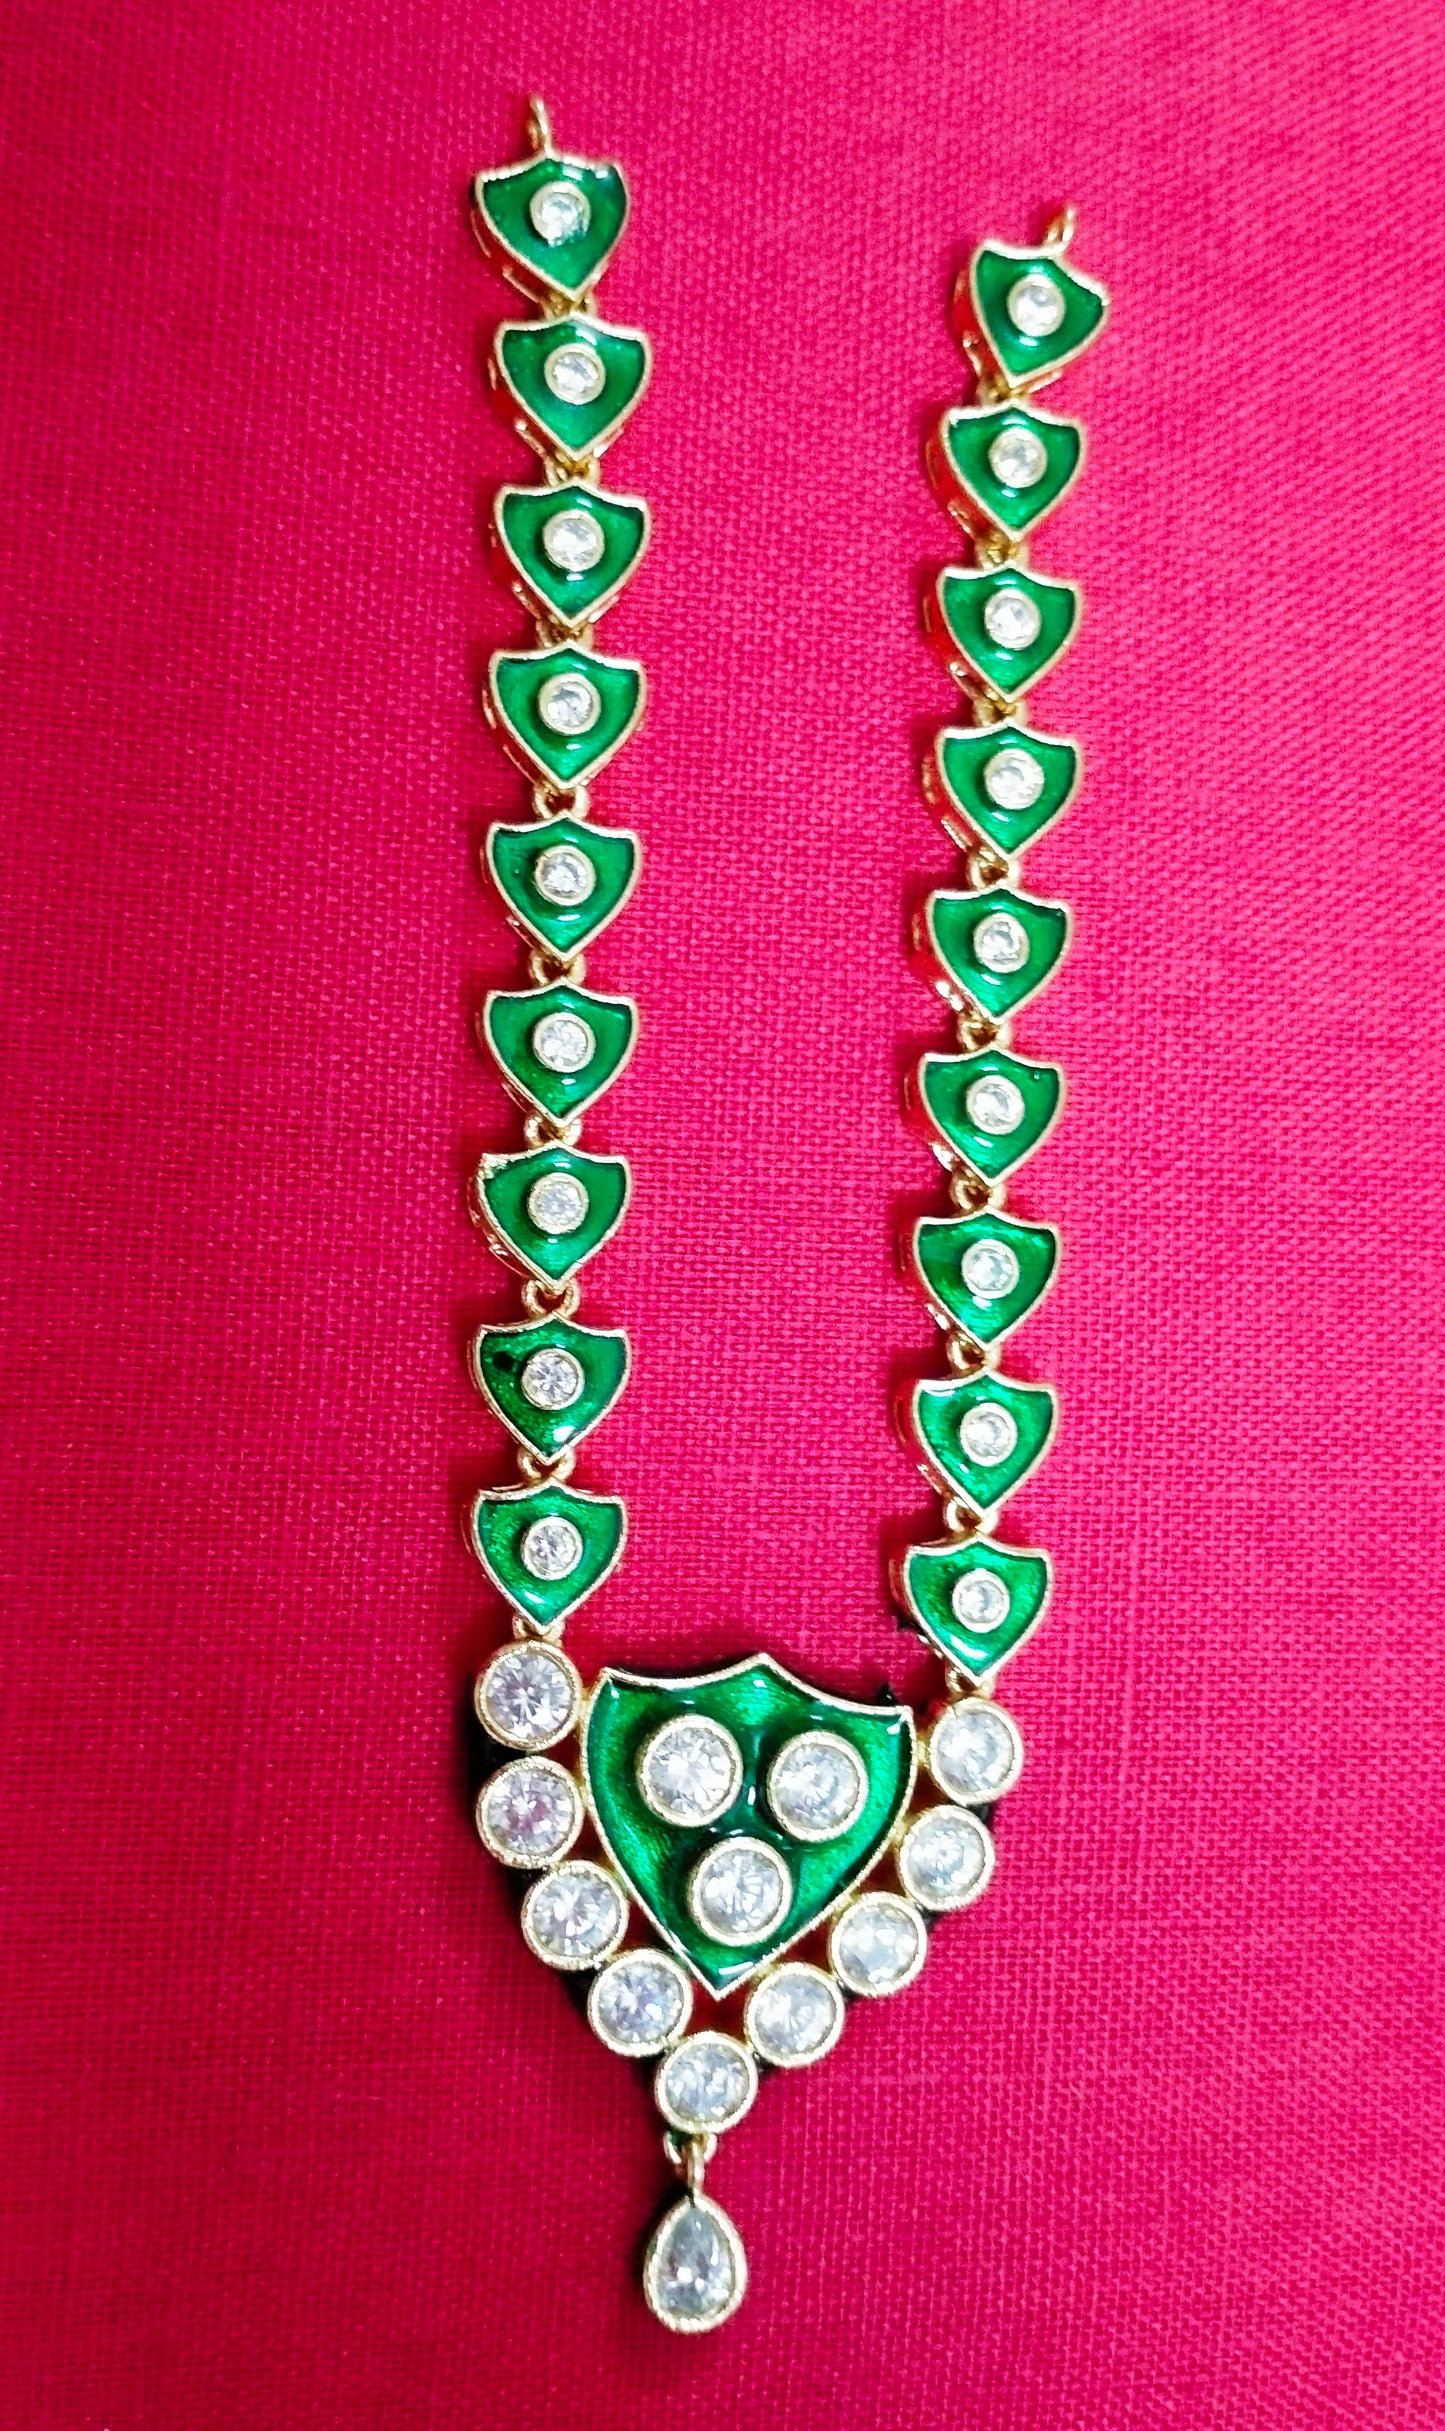 Kundan work artificial stone mala/ necklace